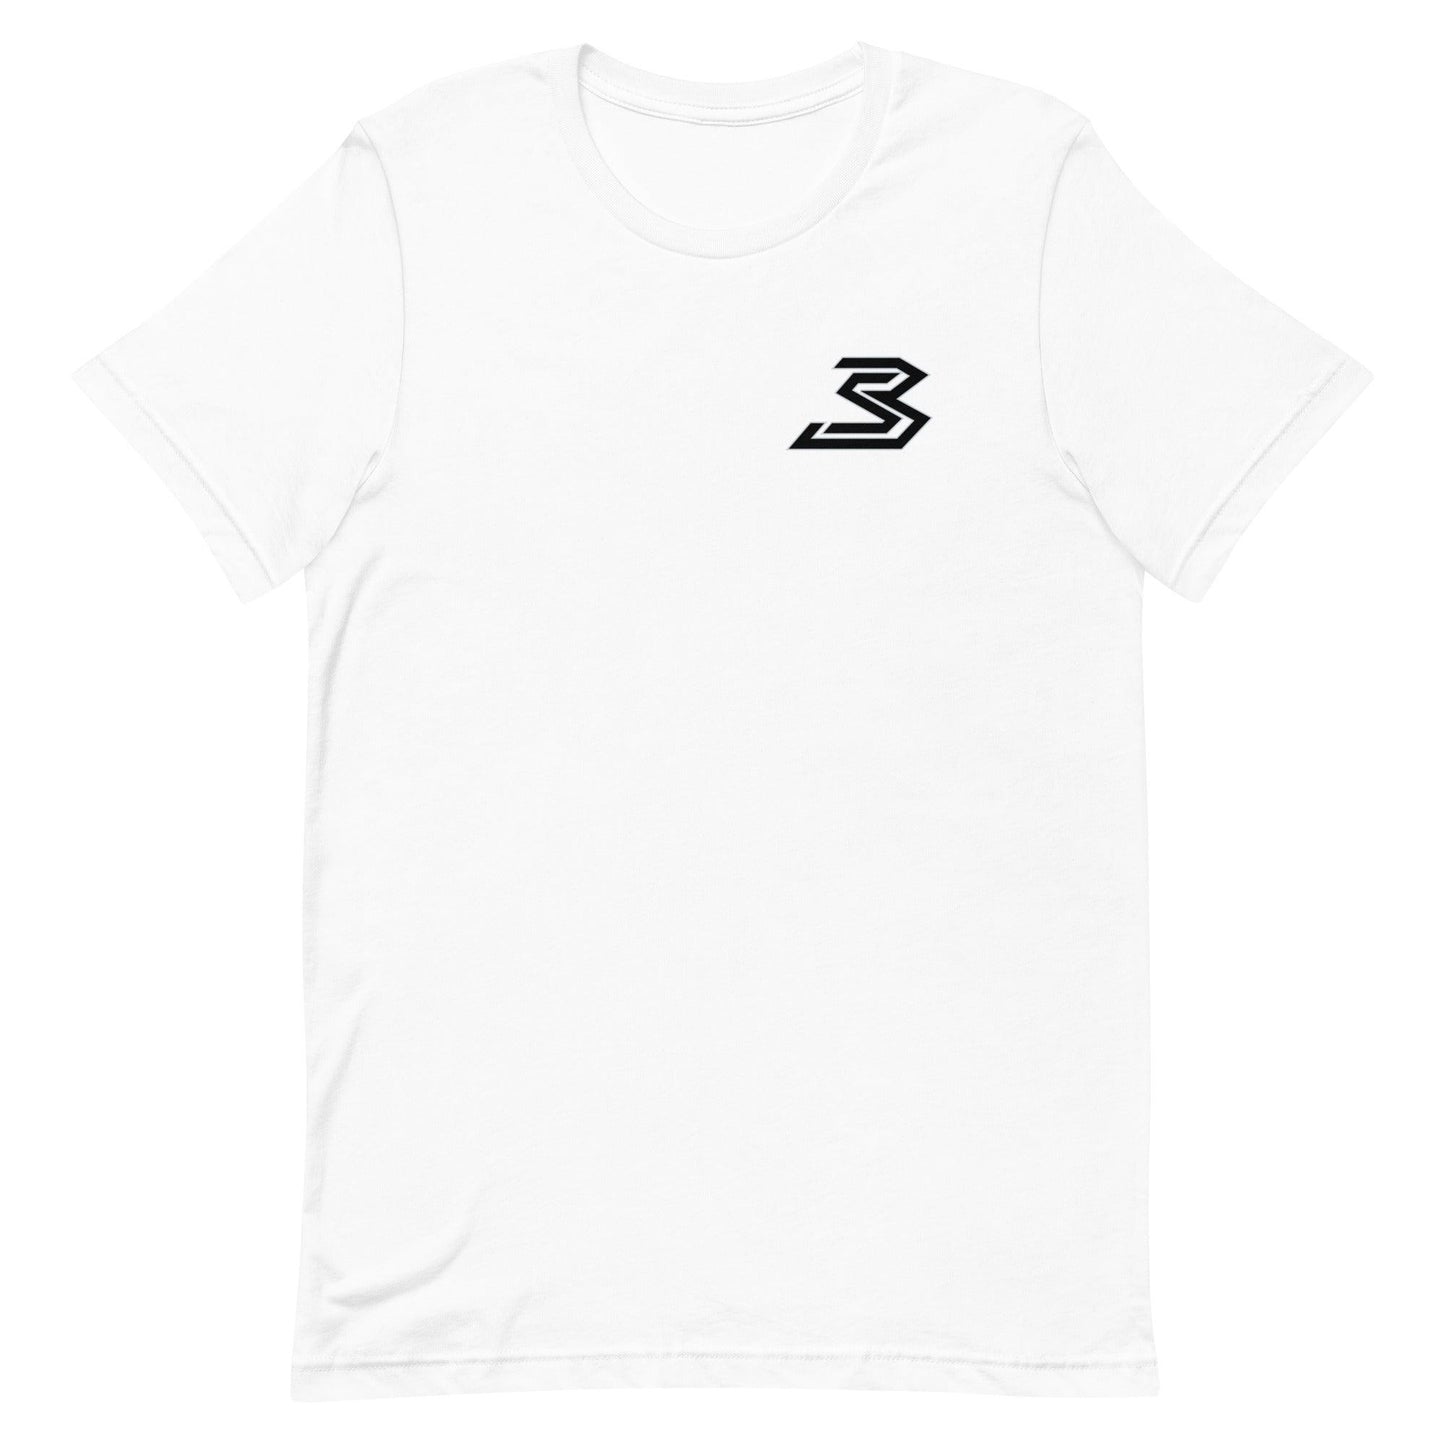 Bennett Sousa "Elite" t-shirt - Fan Arch